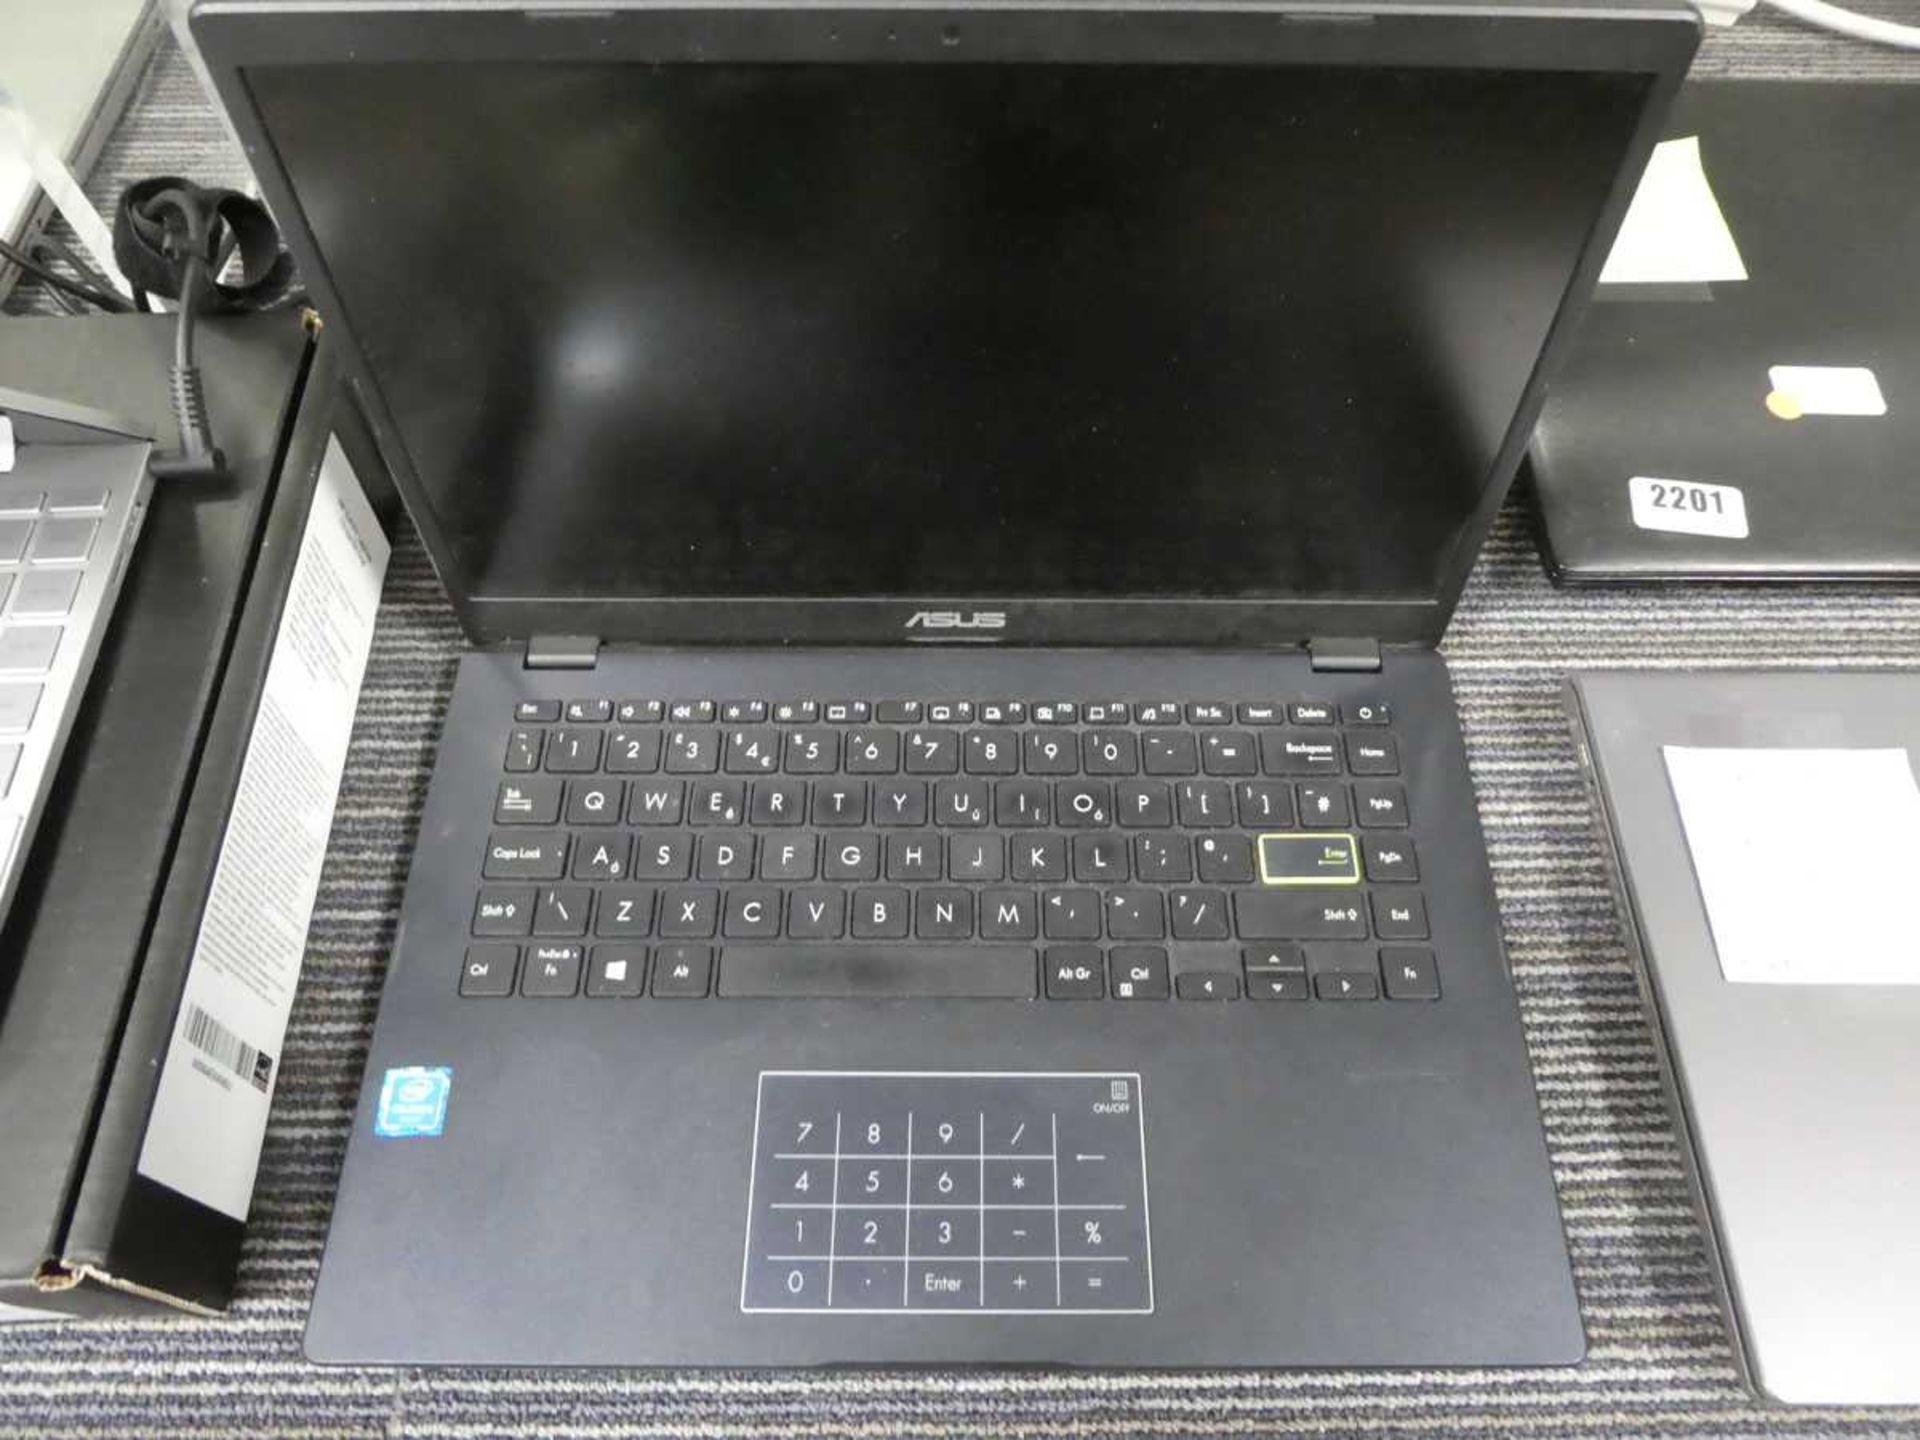 +VAT Asus Vevobook E410MA laptop with Intel Celeron N4020 processor, 4GB RAM, 64GB storage,